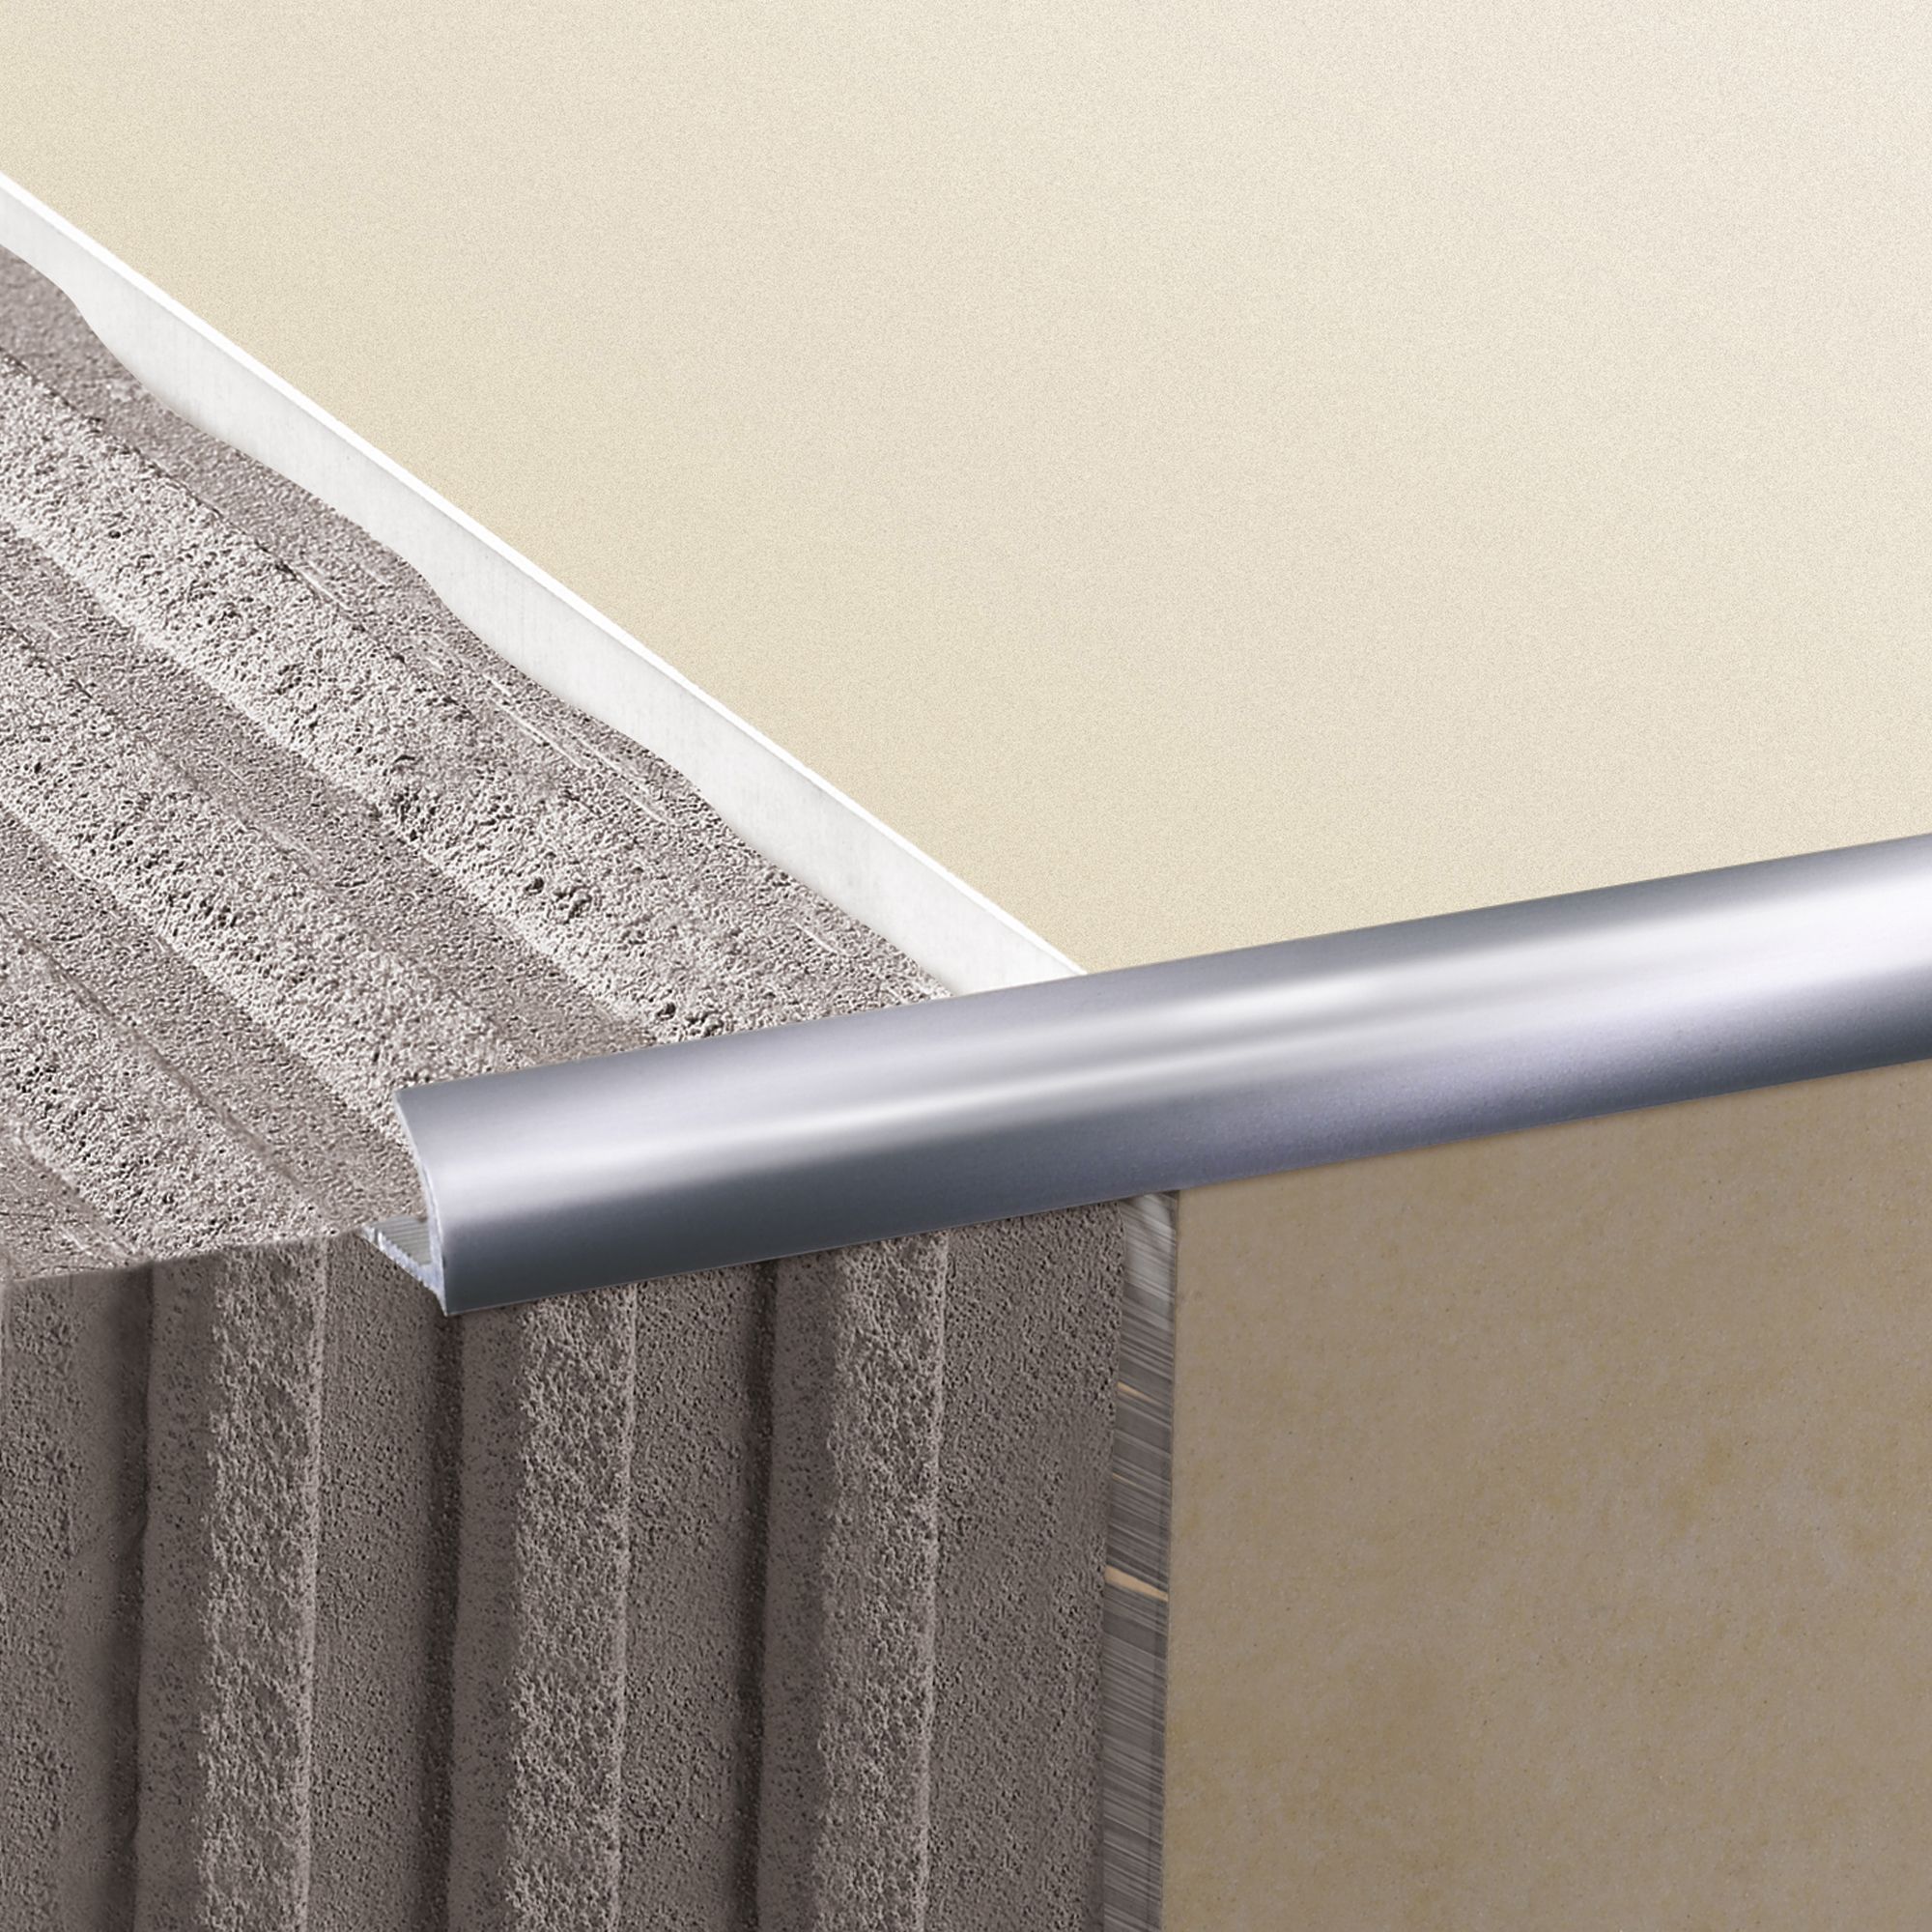 Diall PolishedChrome effect 6mm Round edge Aluminium External edge tile trim